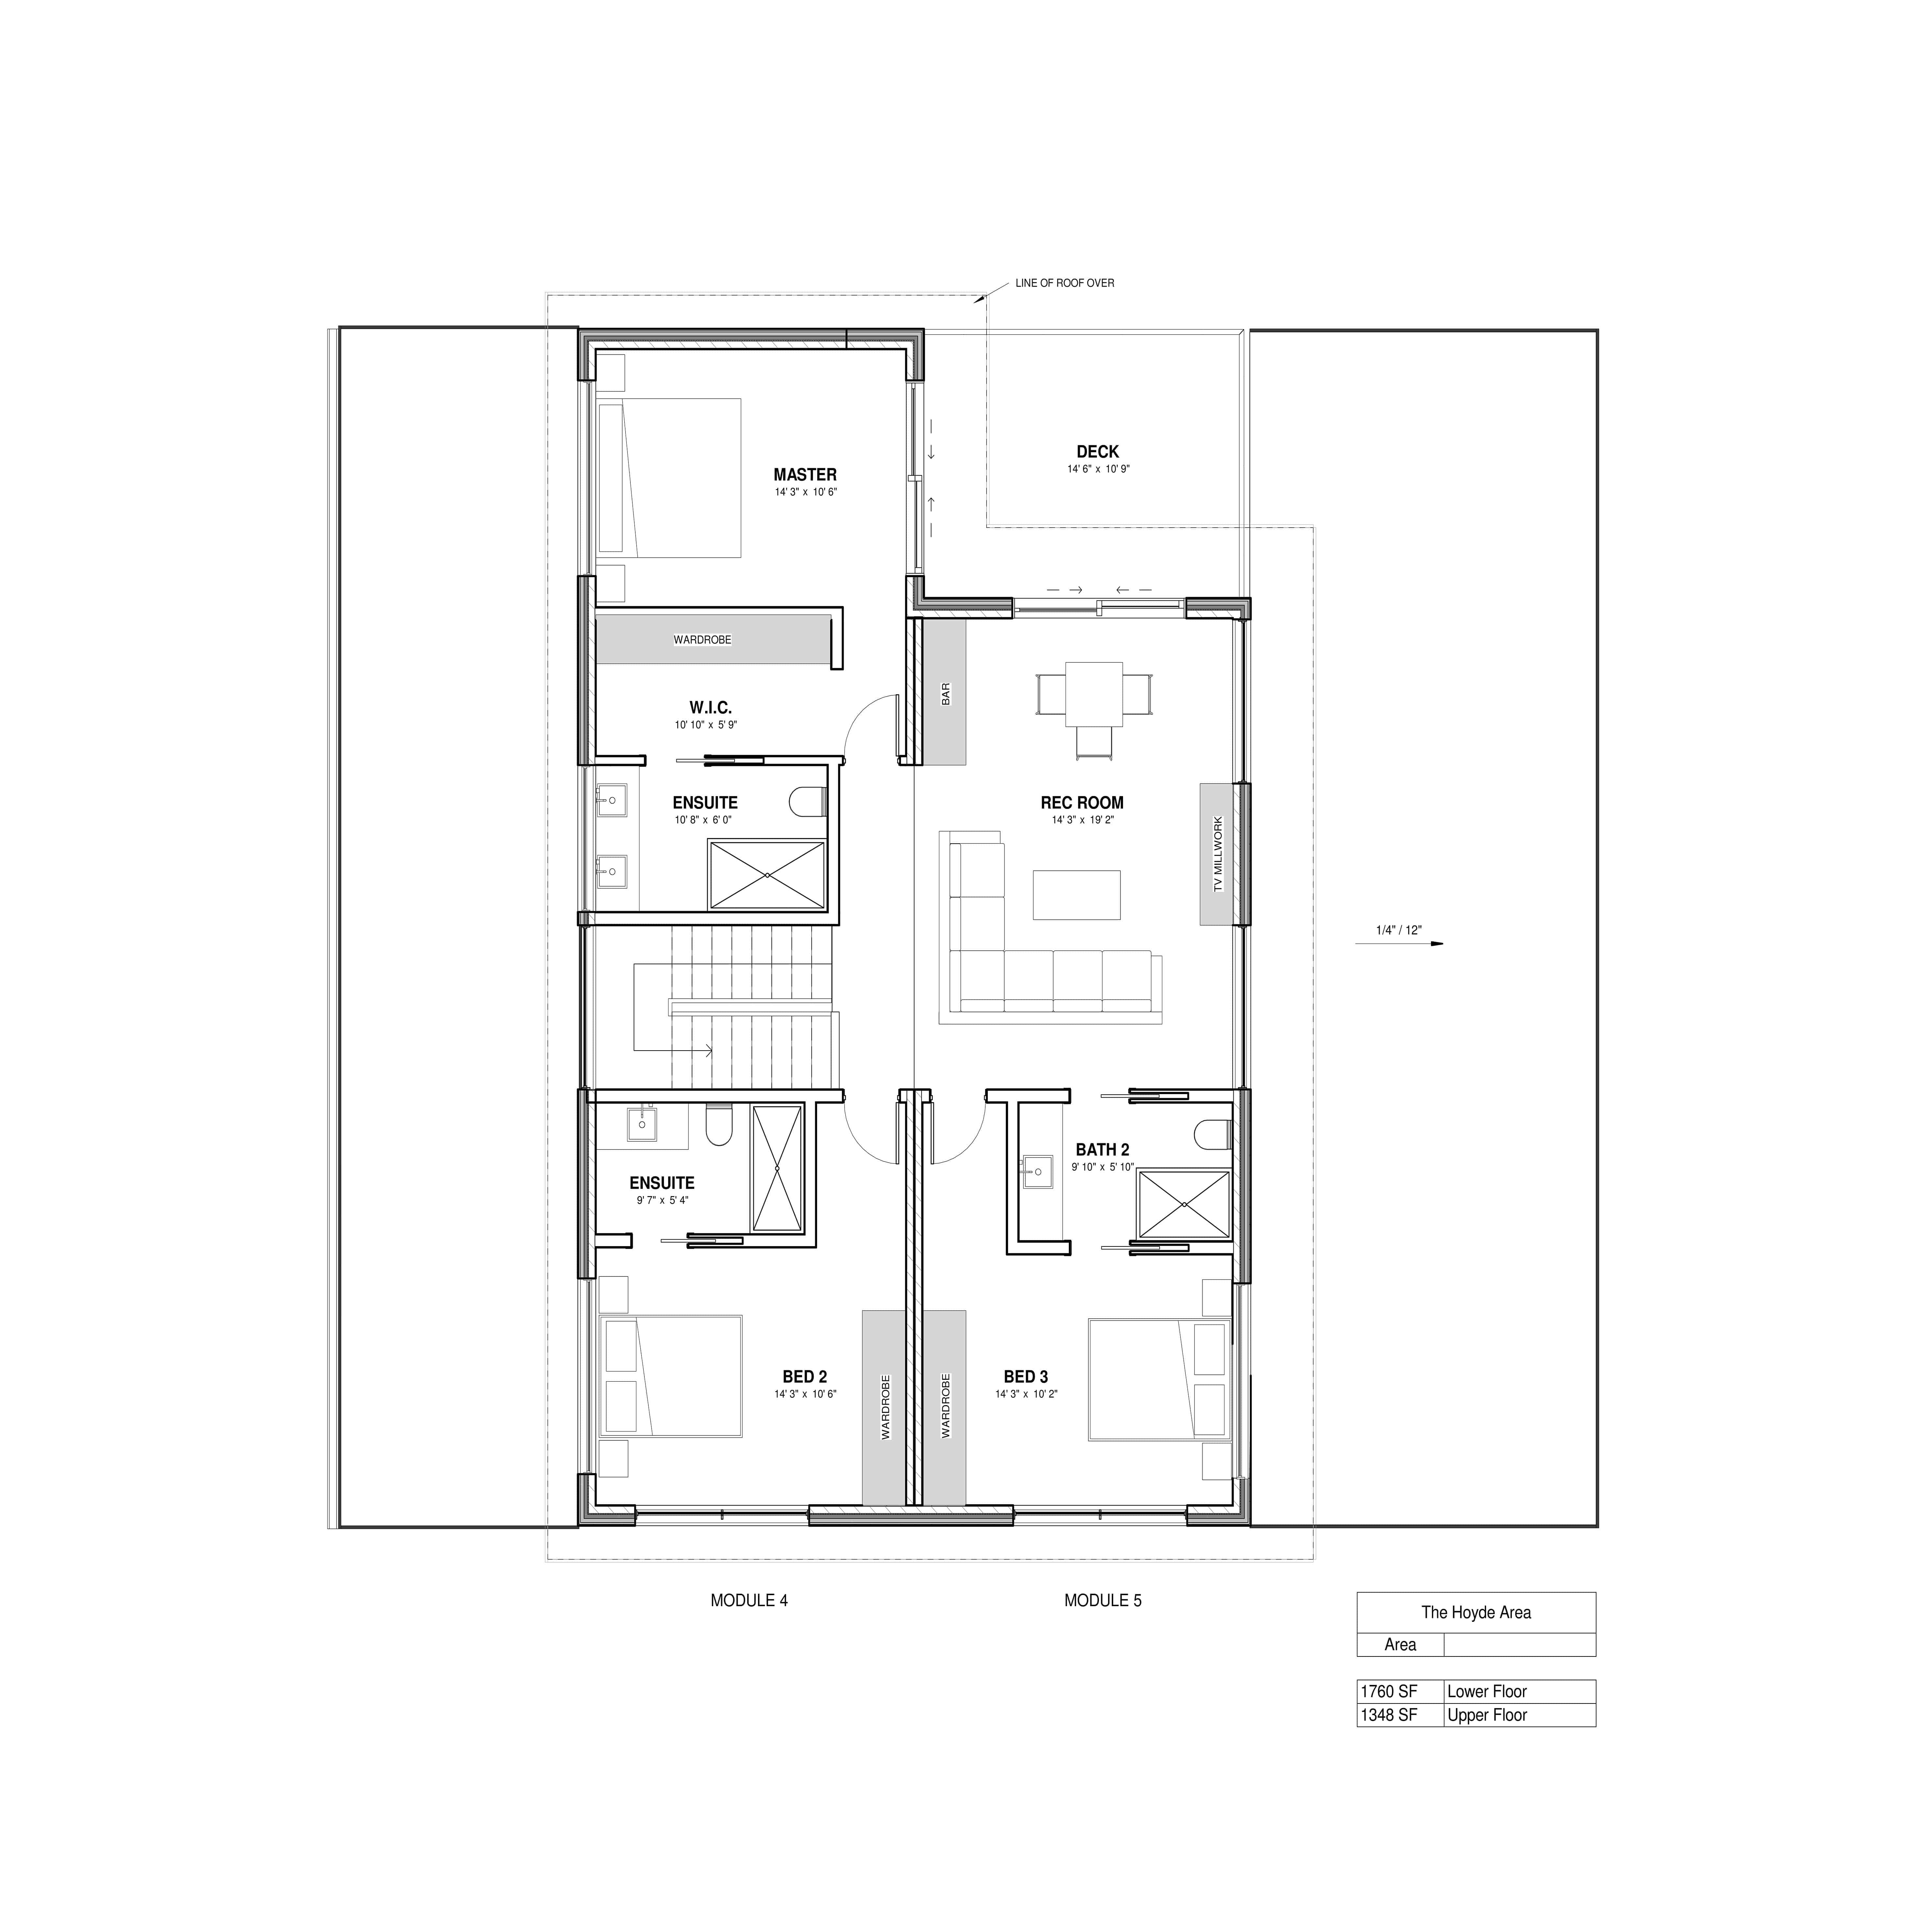 Dvele Hoyde modern prefab home model second level floor plan.